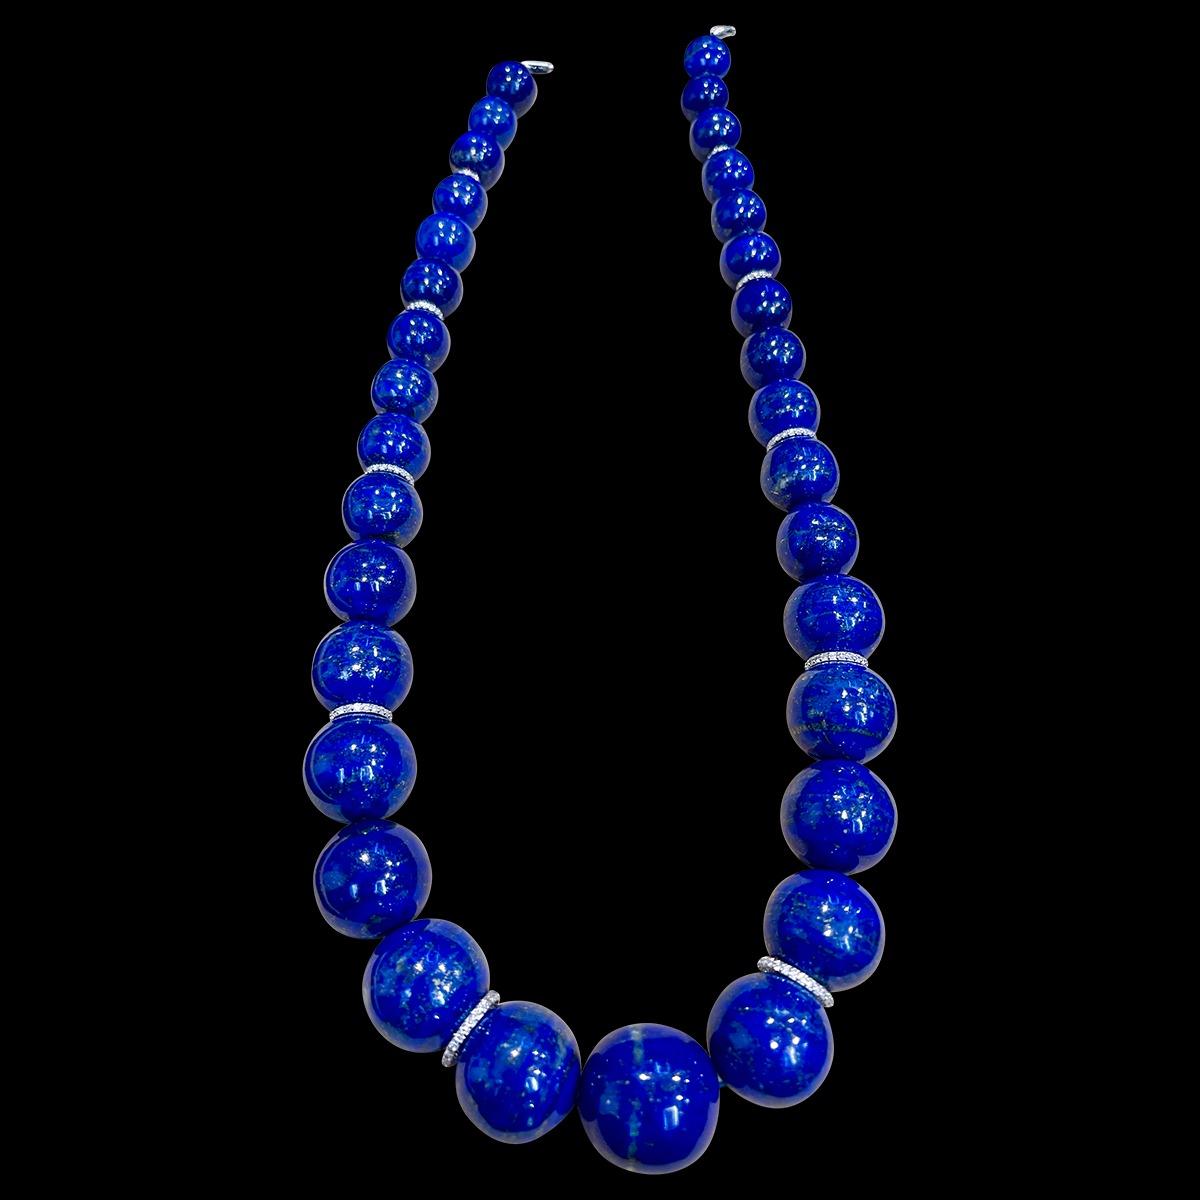 
Certified Lapis Lazuli Vintage Lapis Lazuli Single Strand Necklace  with 2.5 Carat Diamond ringlets and  14 Karat  White Gold Clasp
This marvelous vintage Lapis Lazuli  necklace features 1 row of luscious  huge Beads with 10 diamond